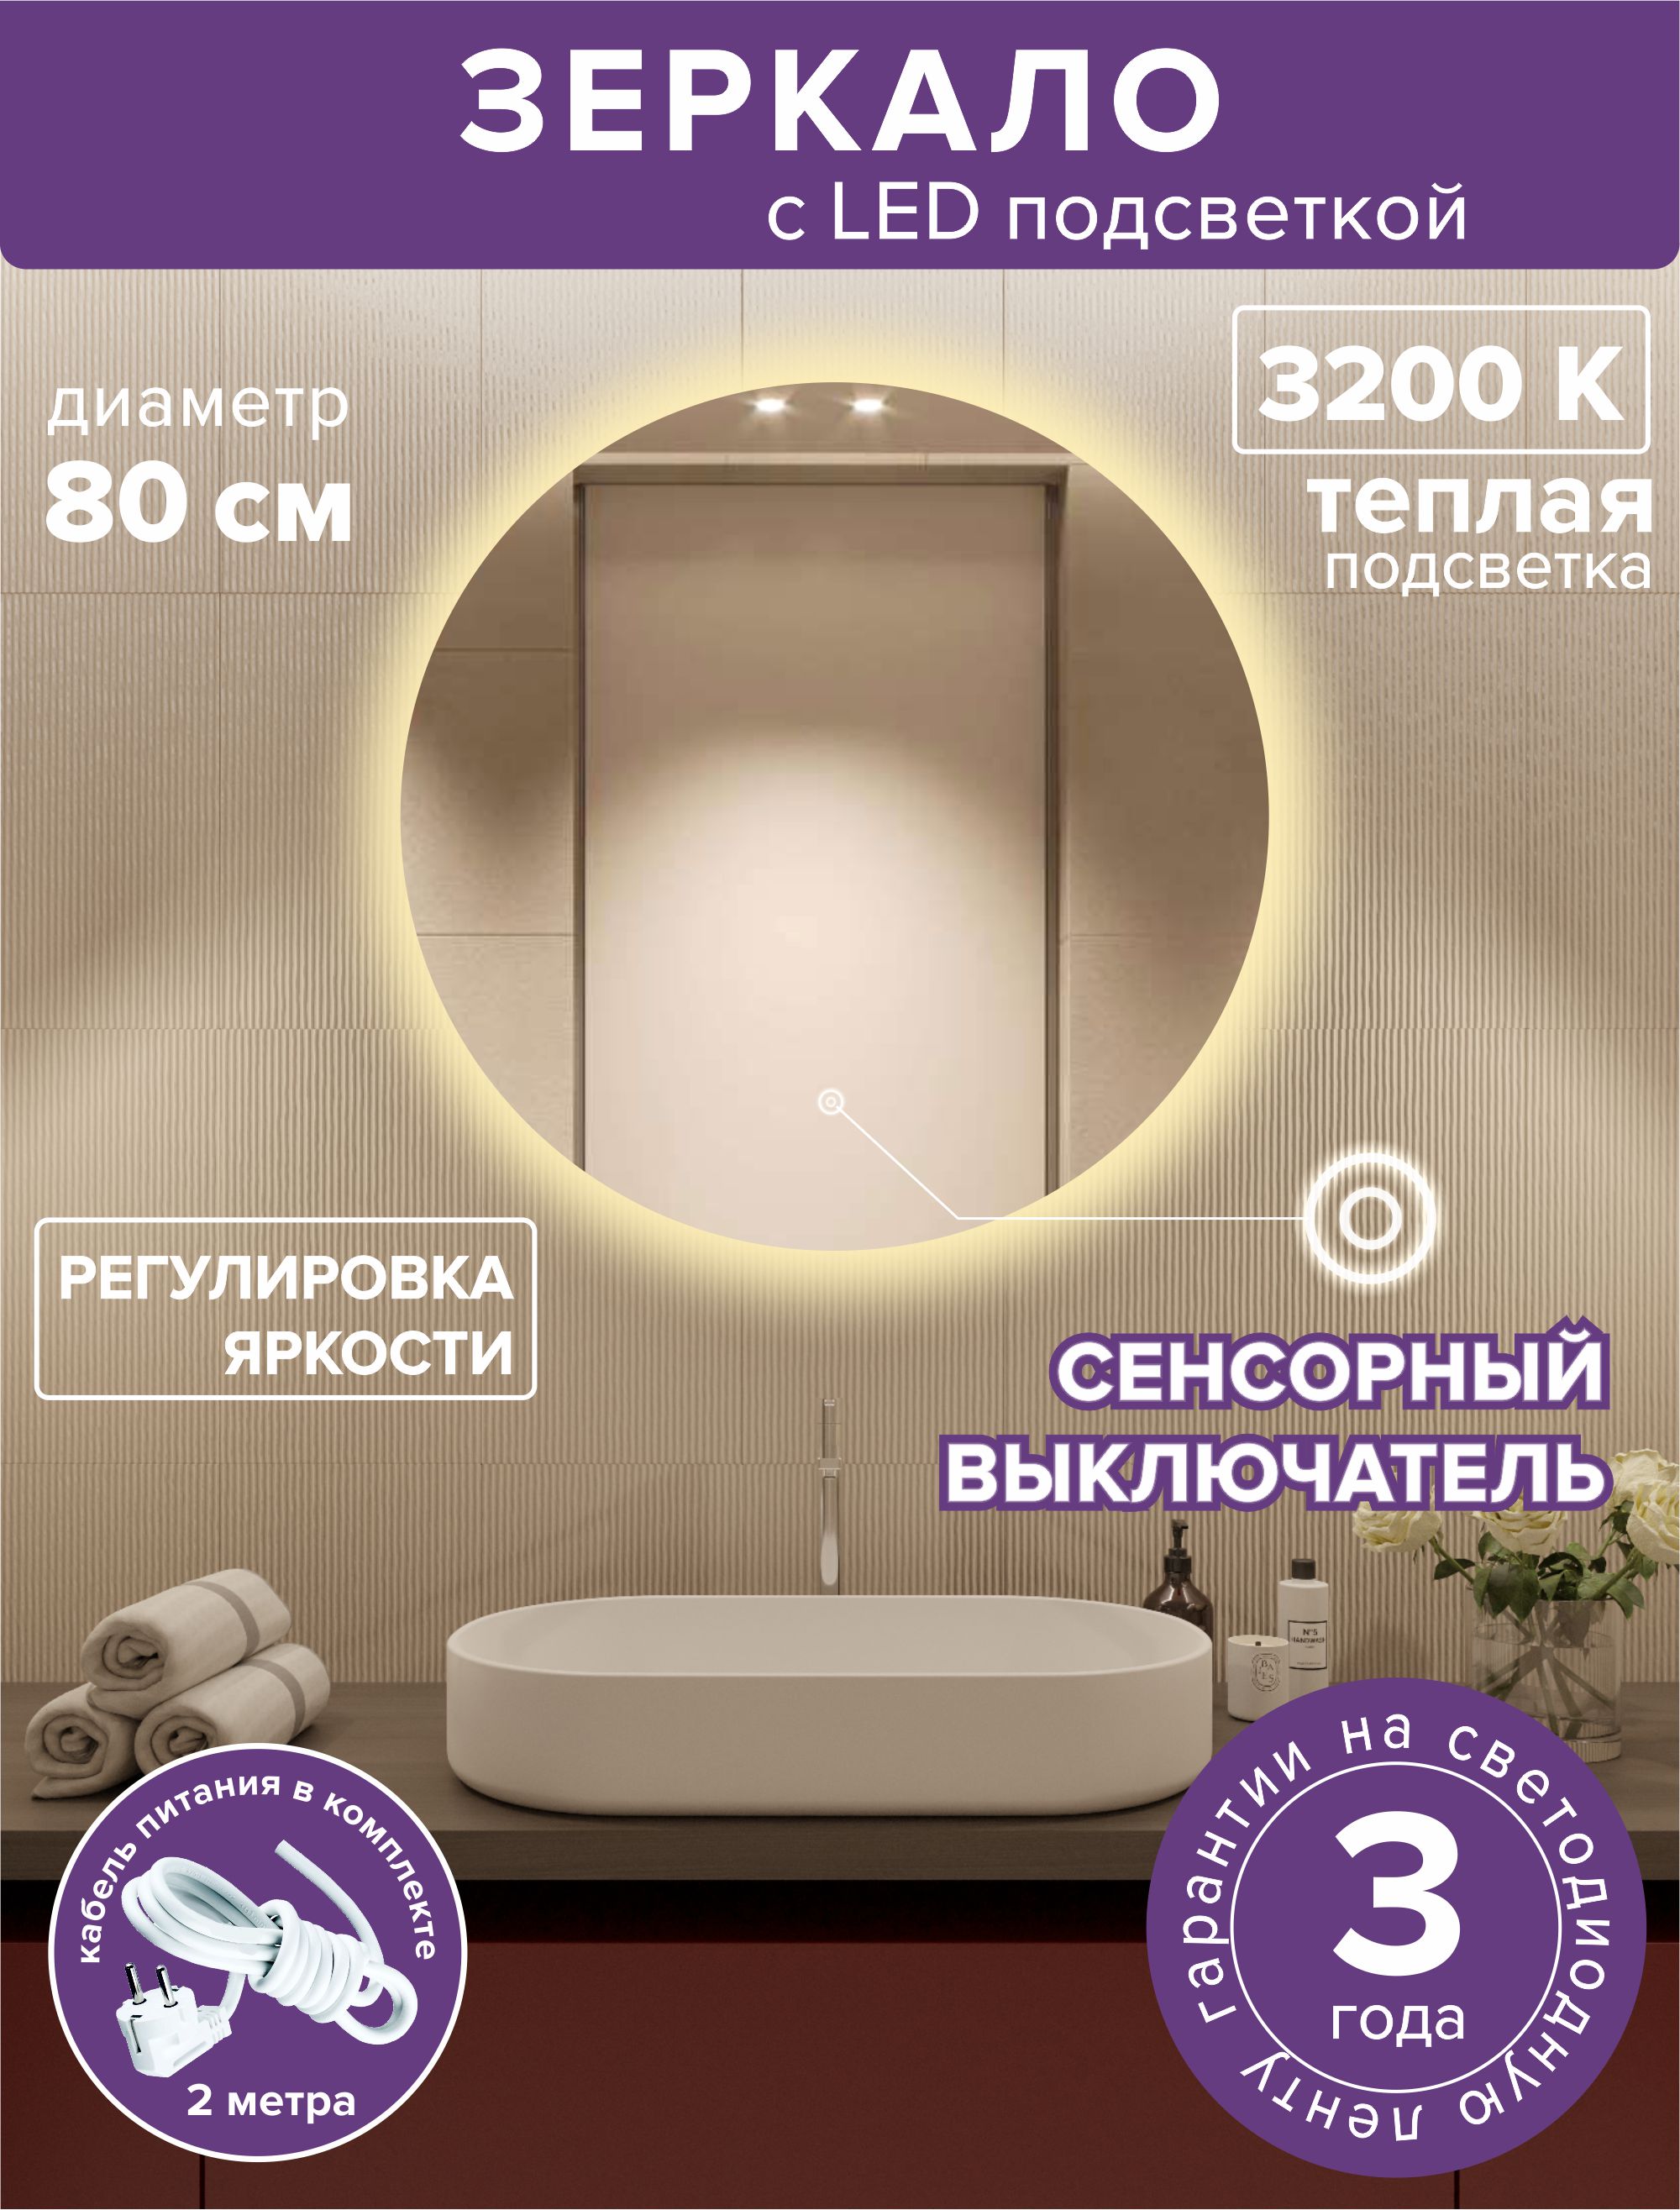 Зеркало для ванной Alfa Mirrors MNa-8Vt круглое, теплая подсветка, 80см зеркало с подсветкой настенное круглое silver mirrors fantom 77 см с bluetooth